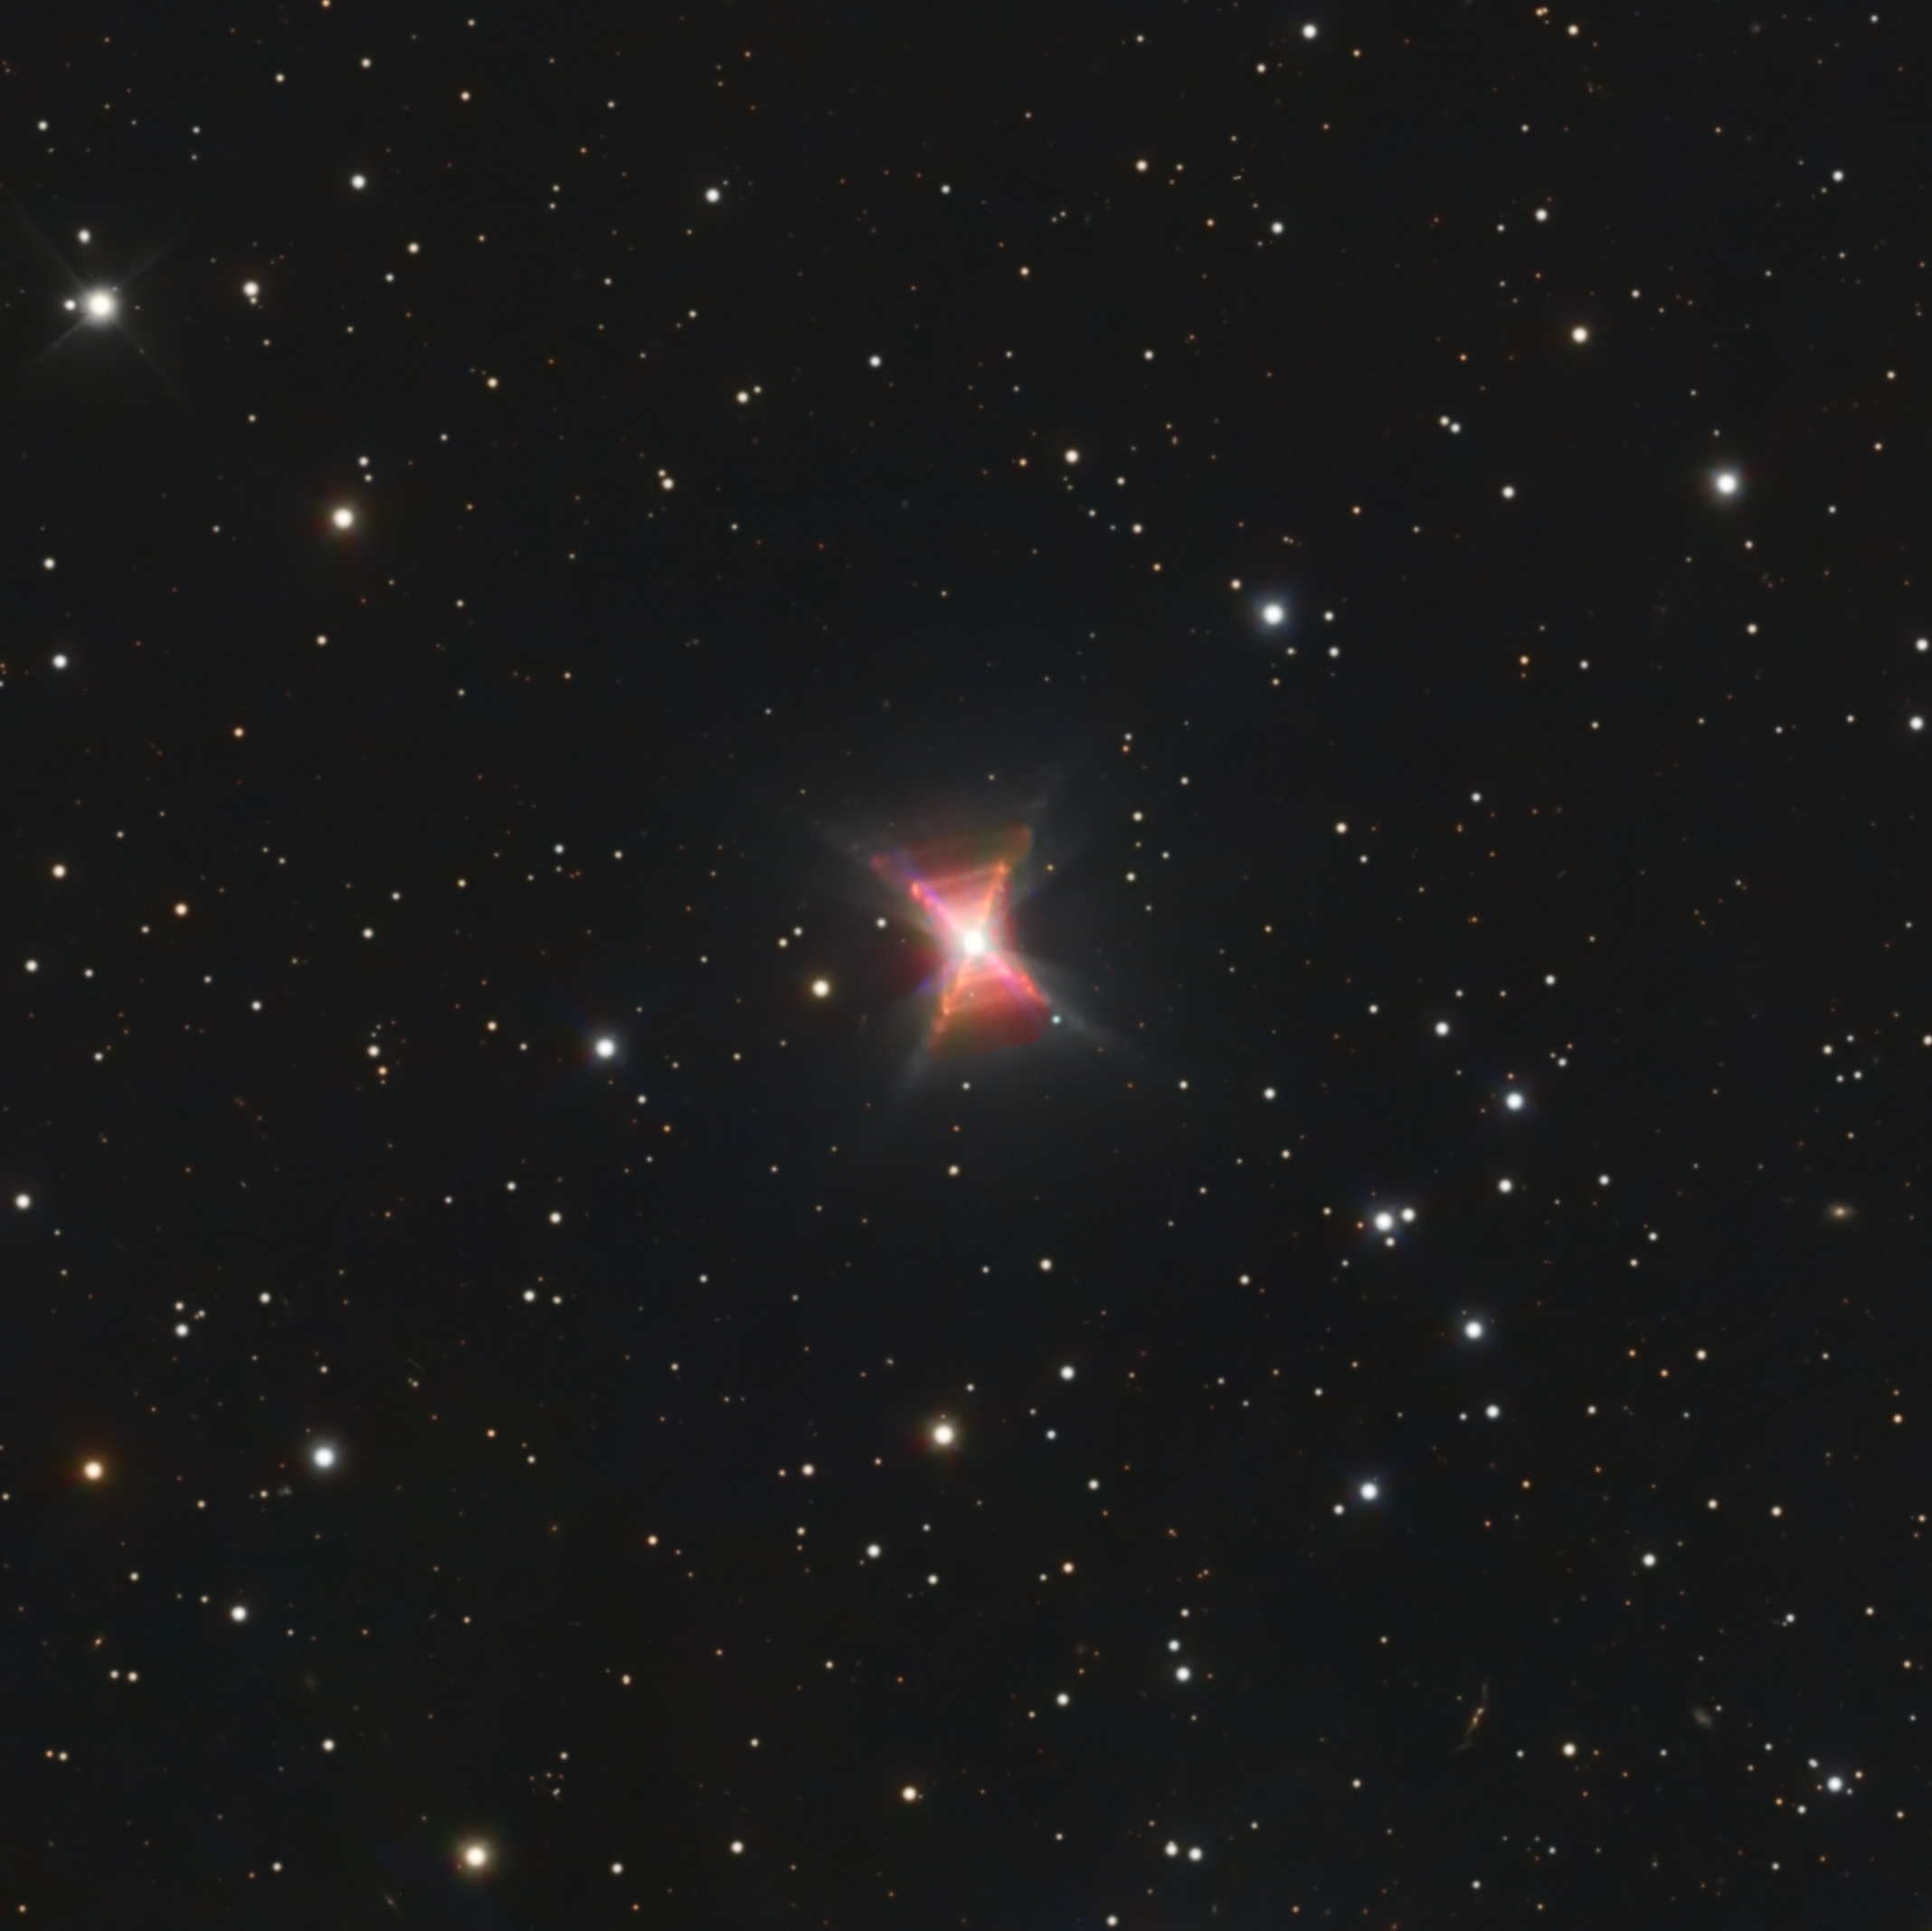 The Red Rectangle Nebula